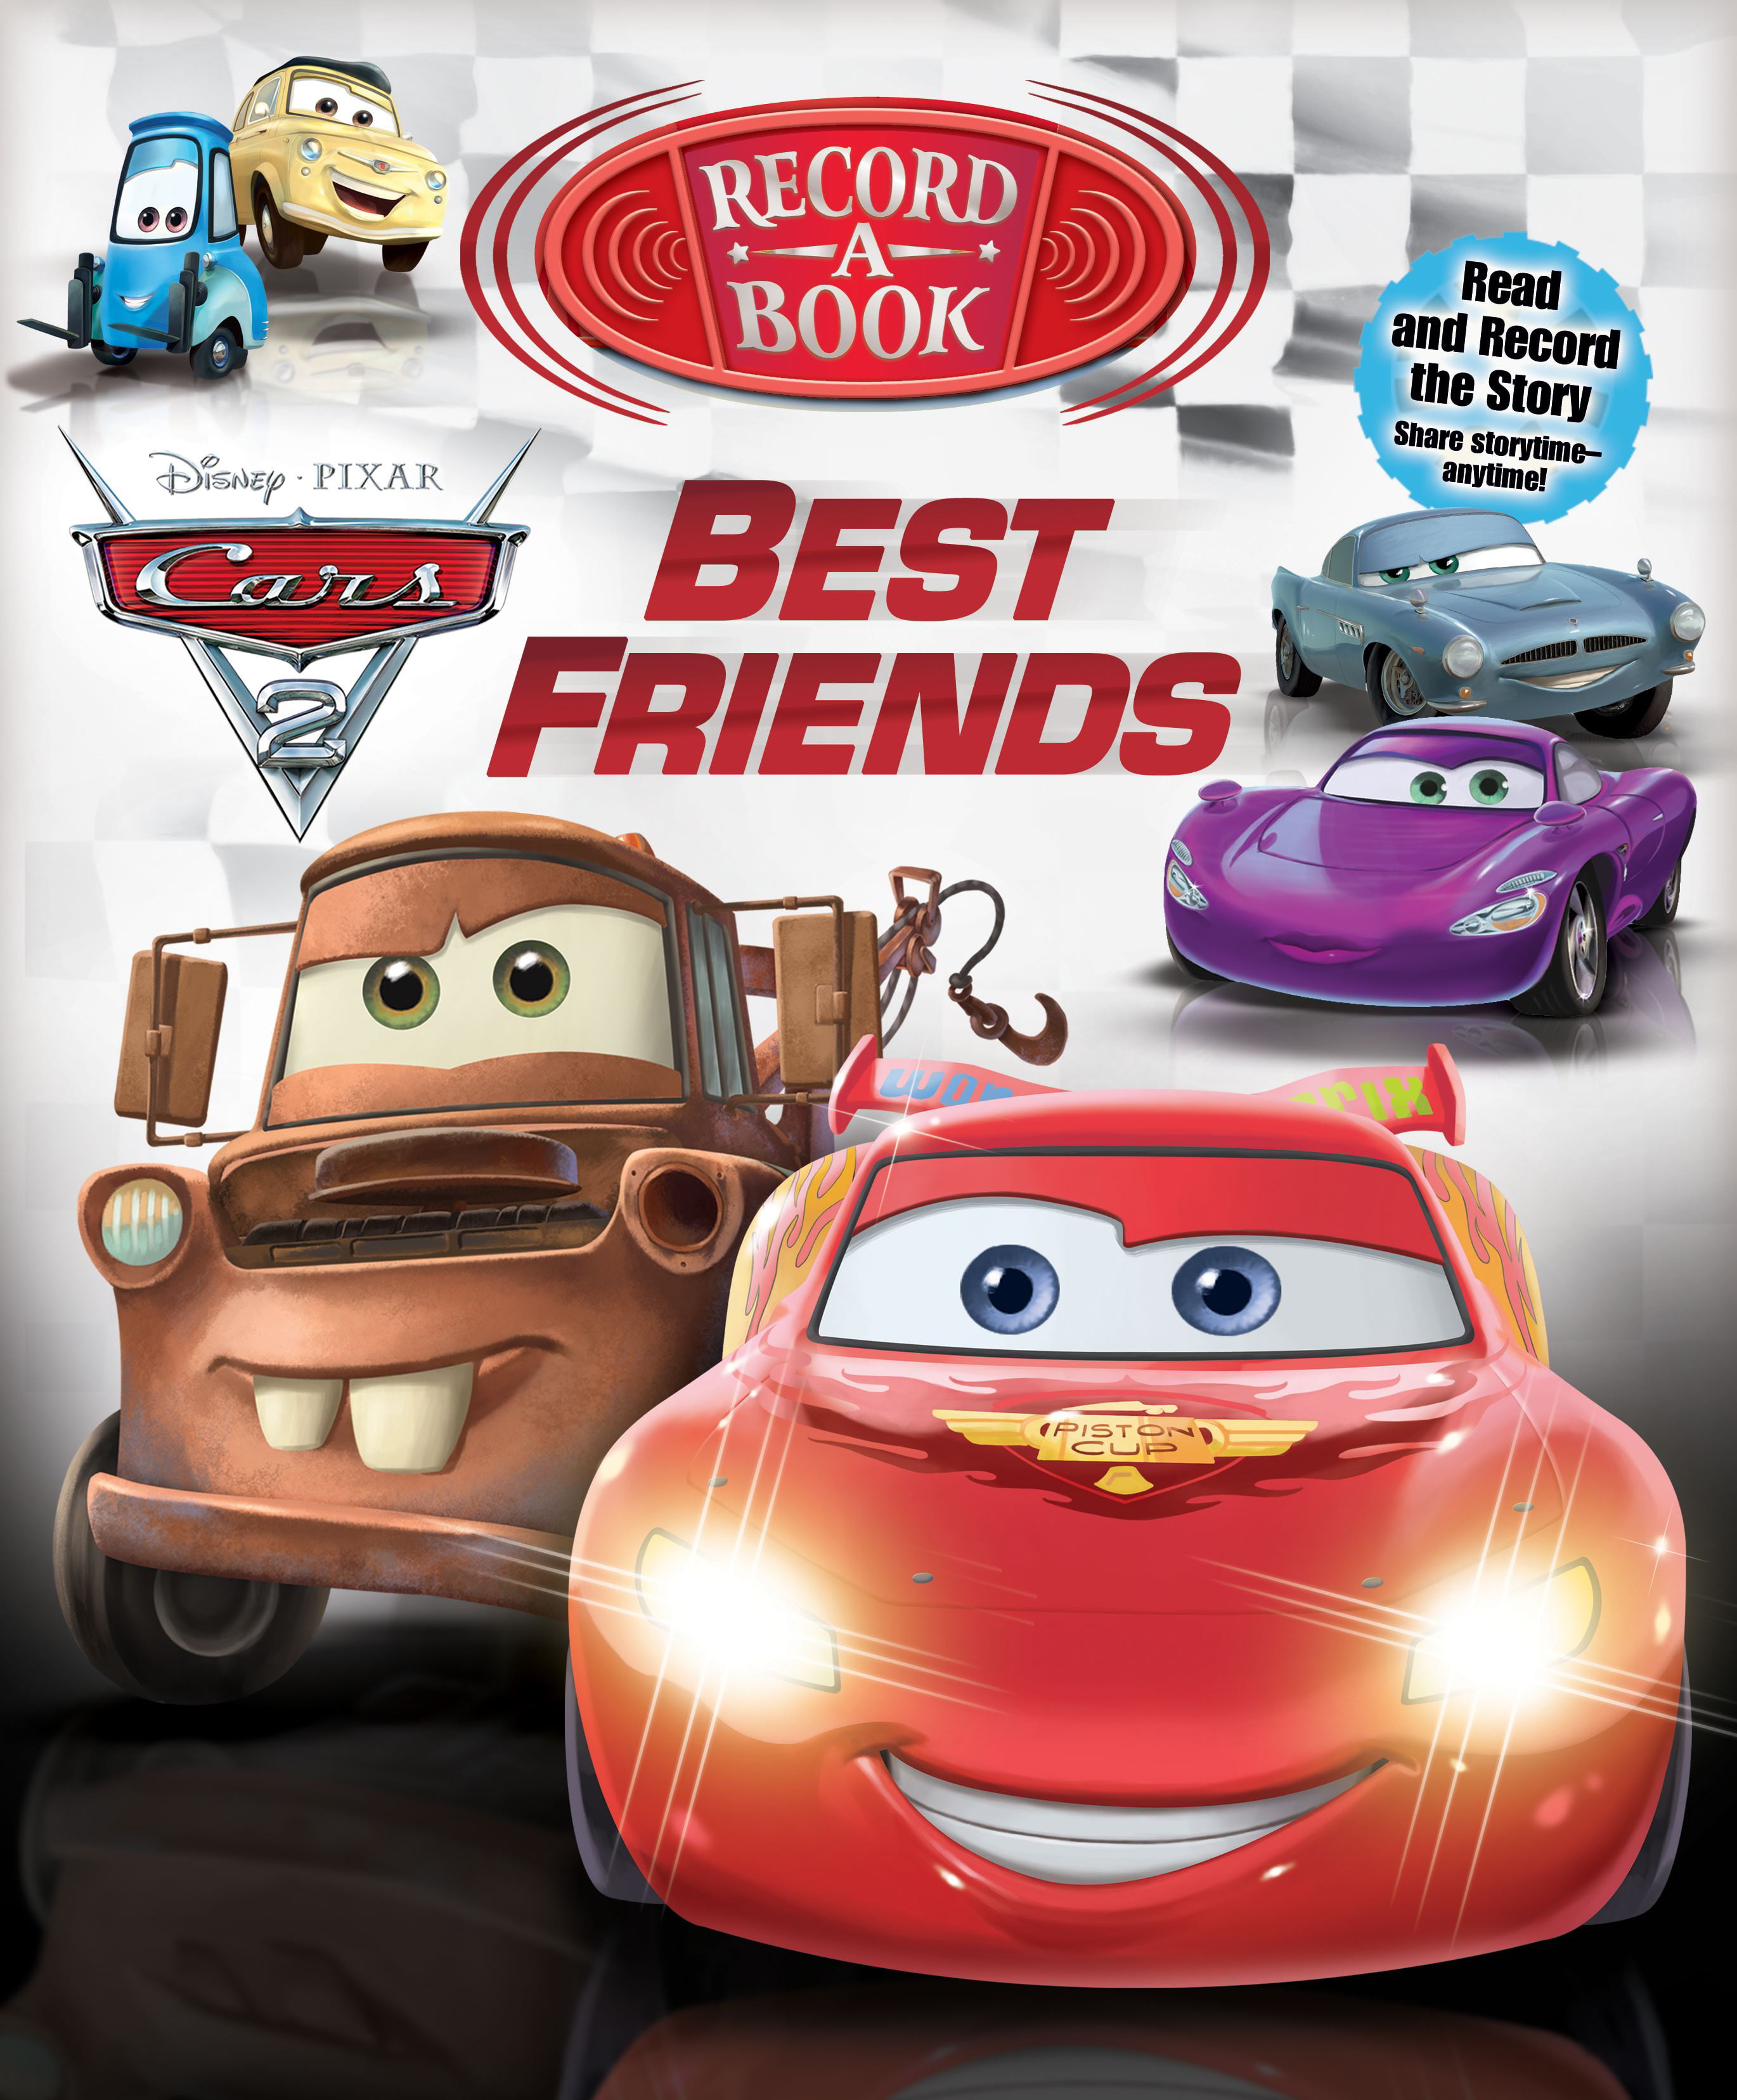 Disney Pixar Cars 2 Best Friends Record a Book Walmart